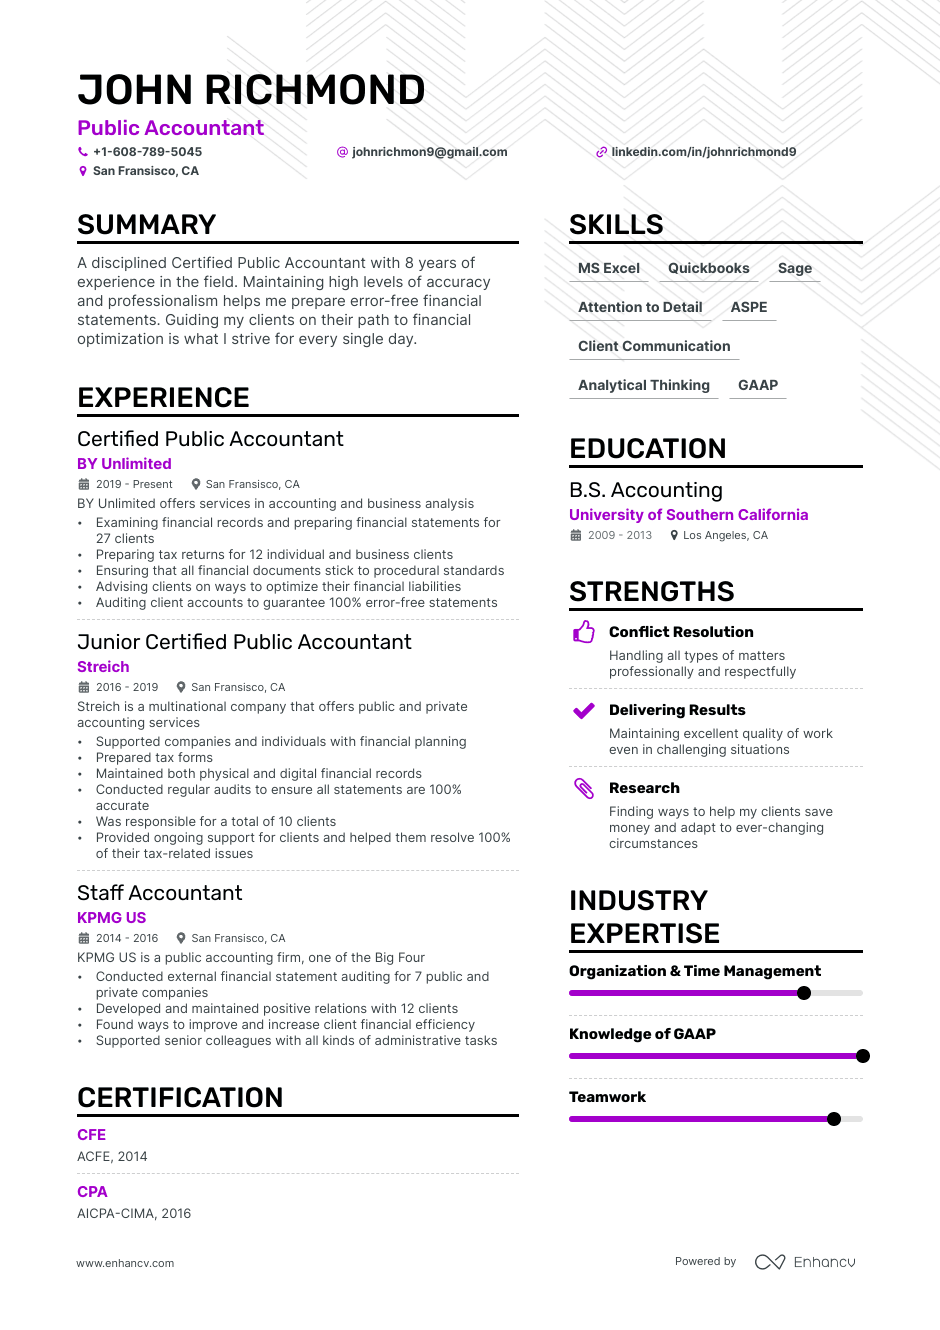 Public accountant resume example